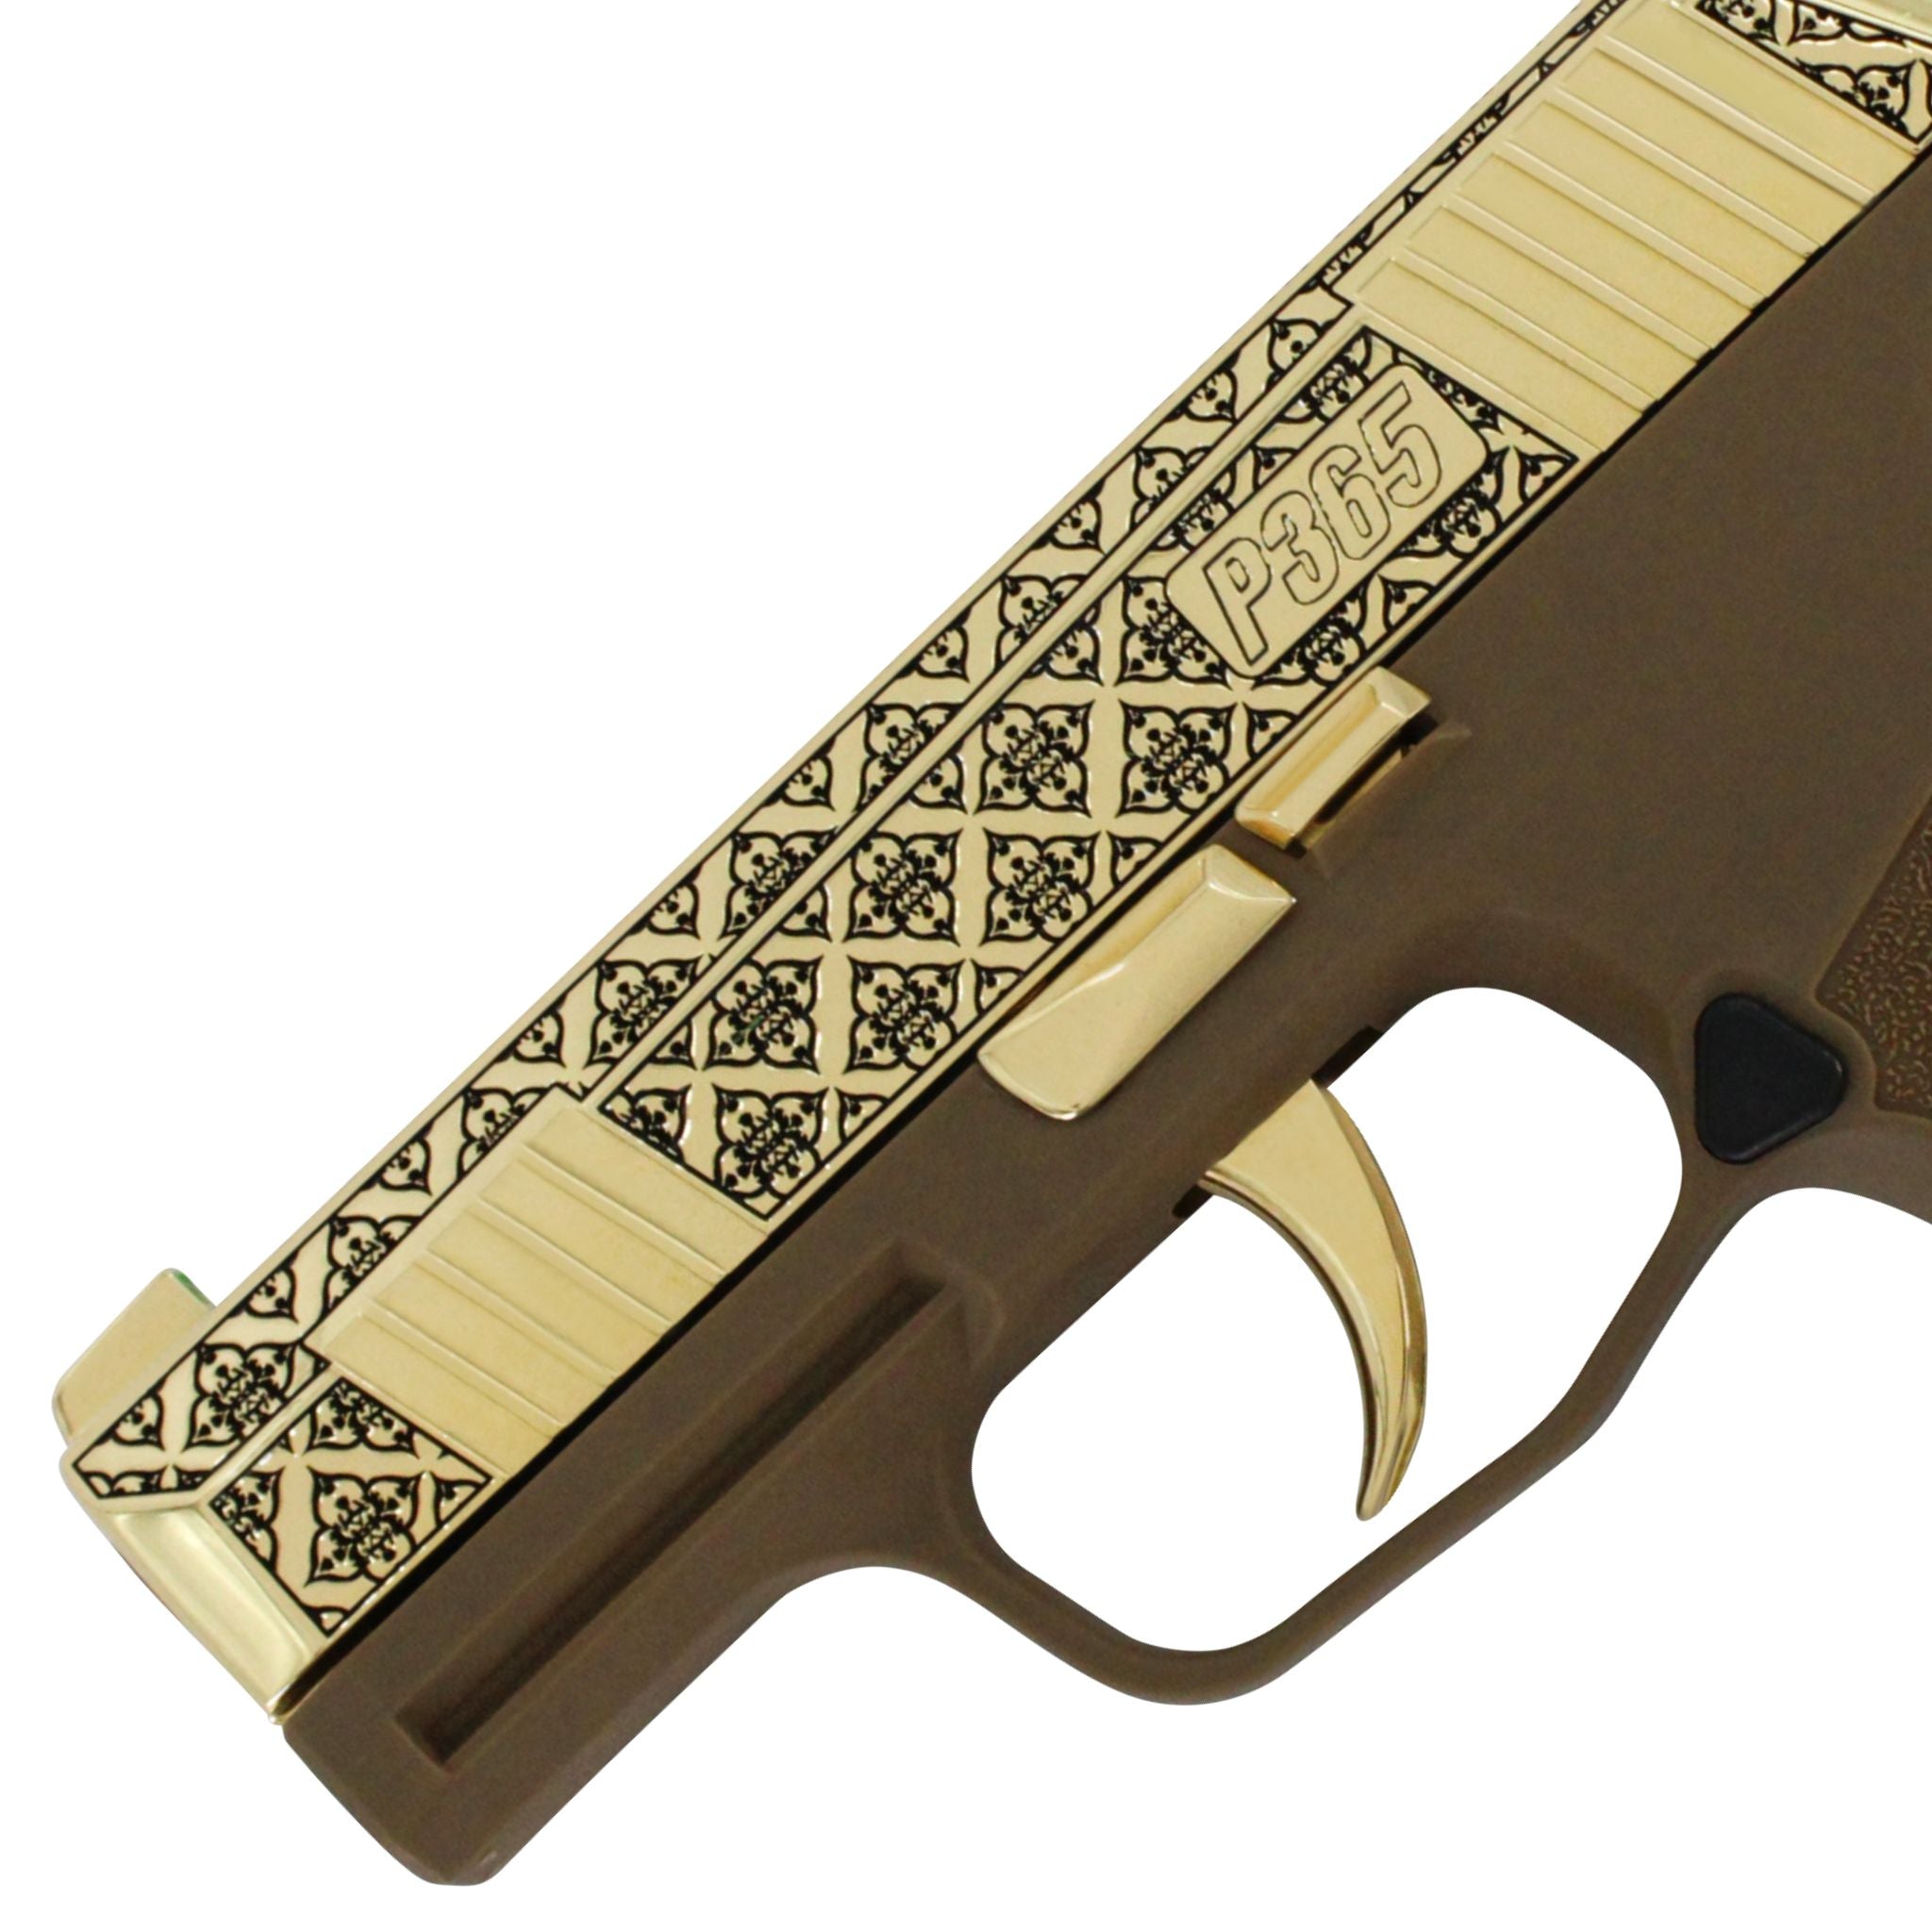 Sig Sauer P365, 9MM, Coyote Arabesque Design, 24K Gold Slide and Accents, SKU: 6697942548582, 24 karat gold gun, 24 Karat Gold Firearm